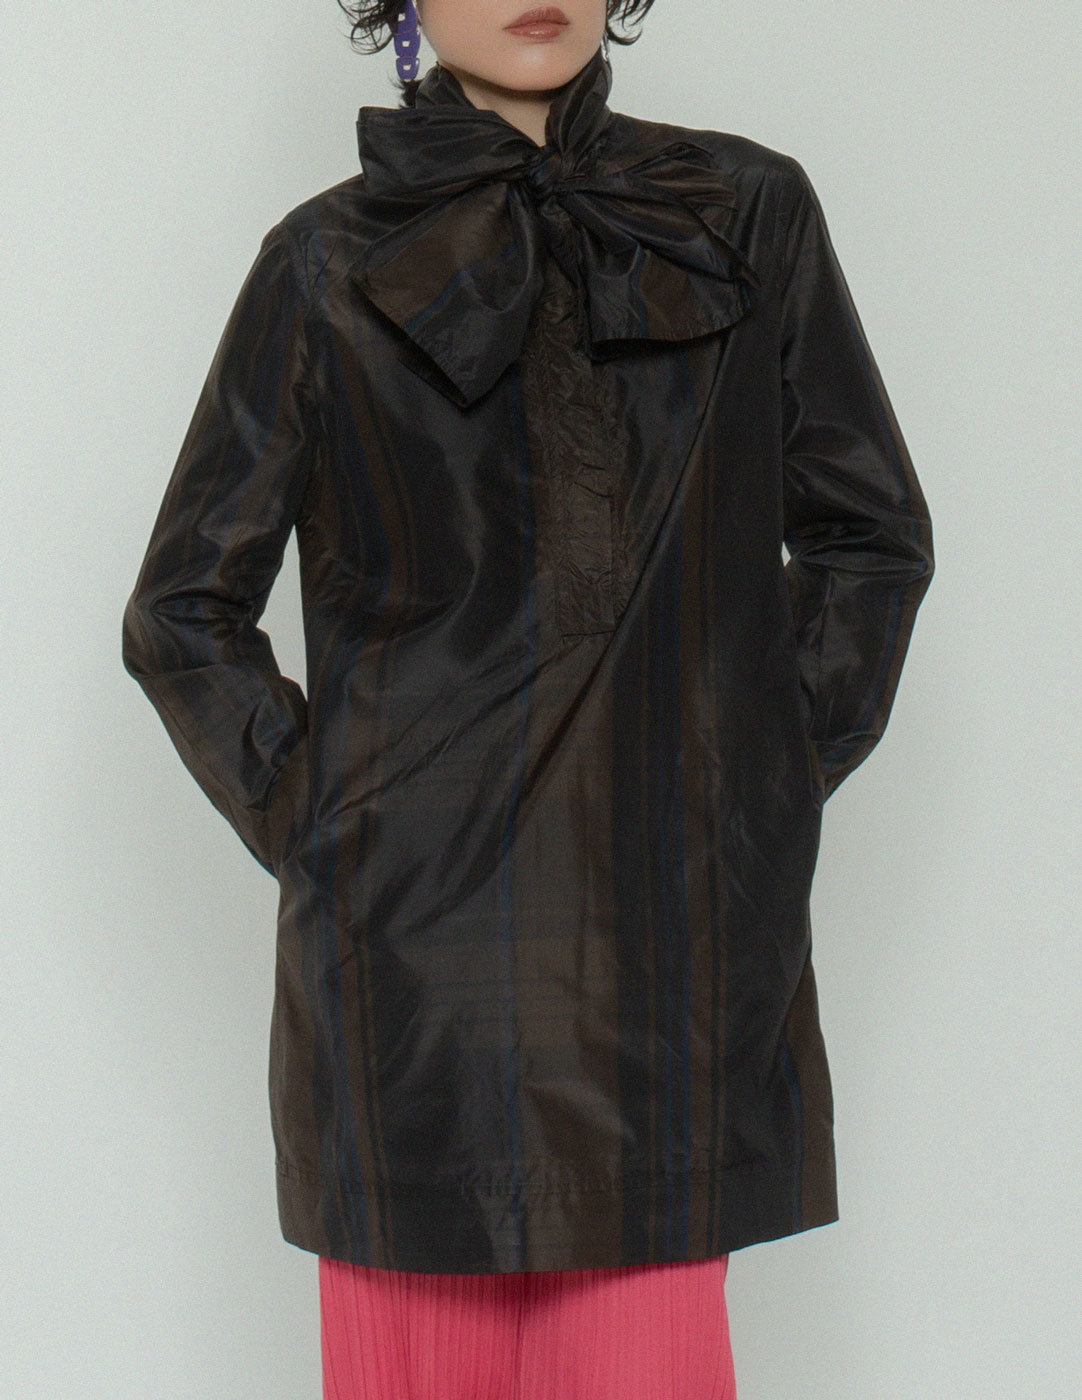 Yves Saint Laurent taffeta silk bow dress detail